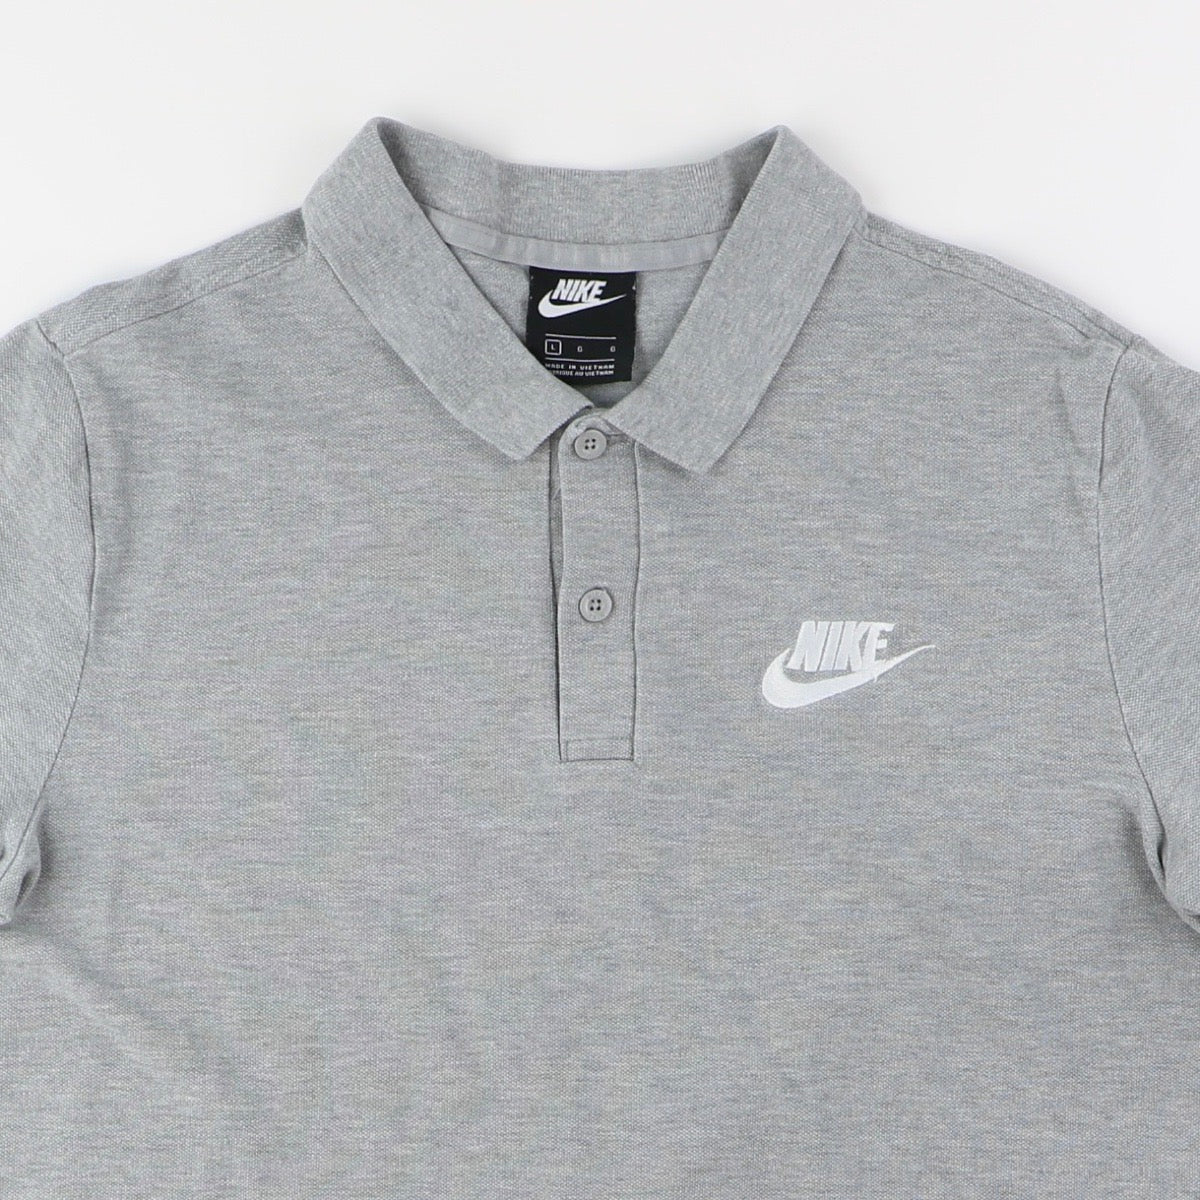 Nike Polo Shirt (M)